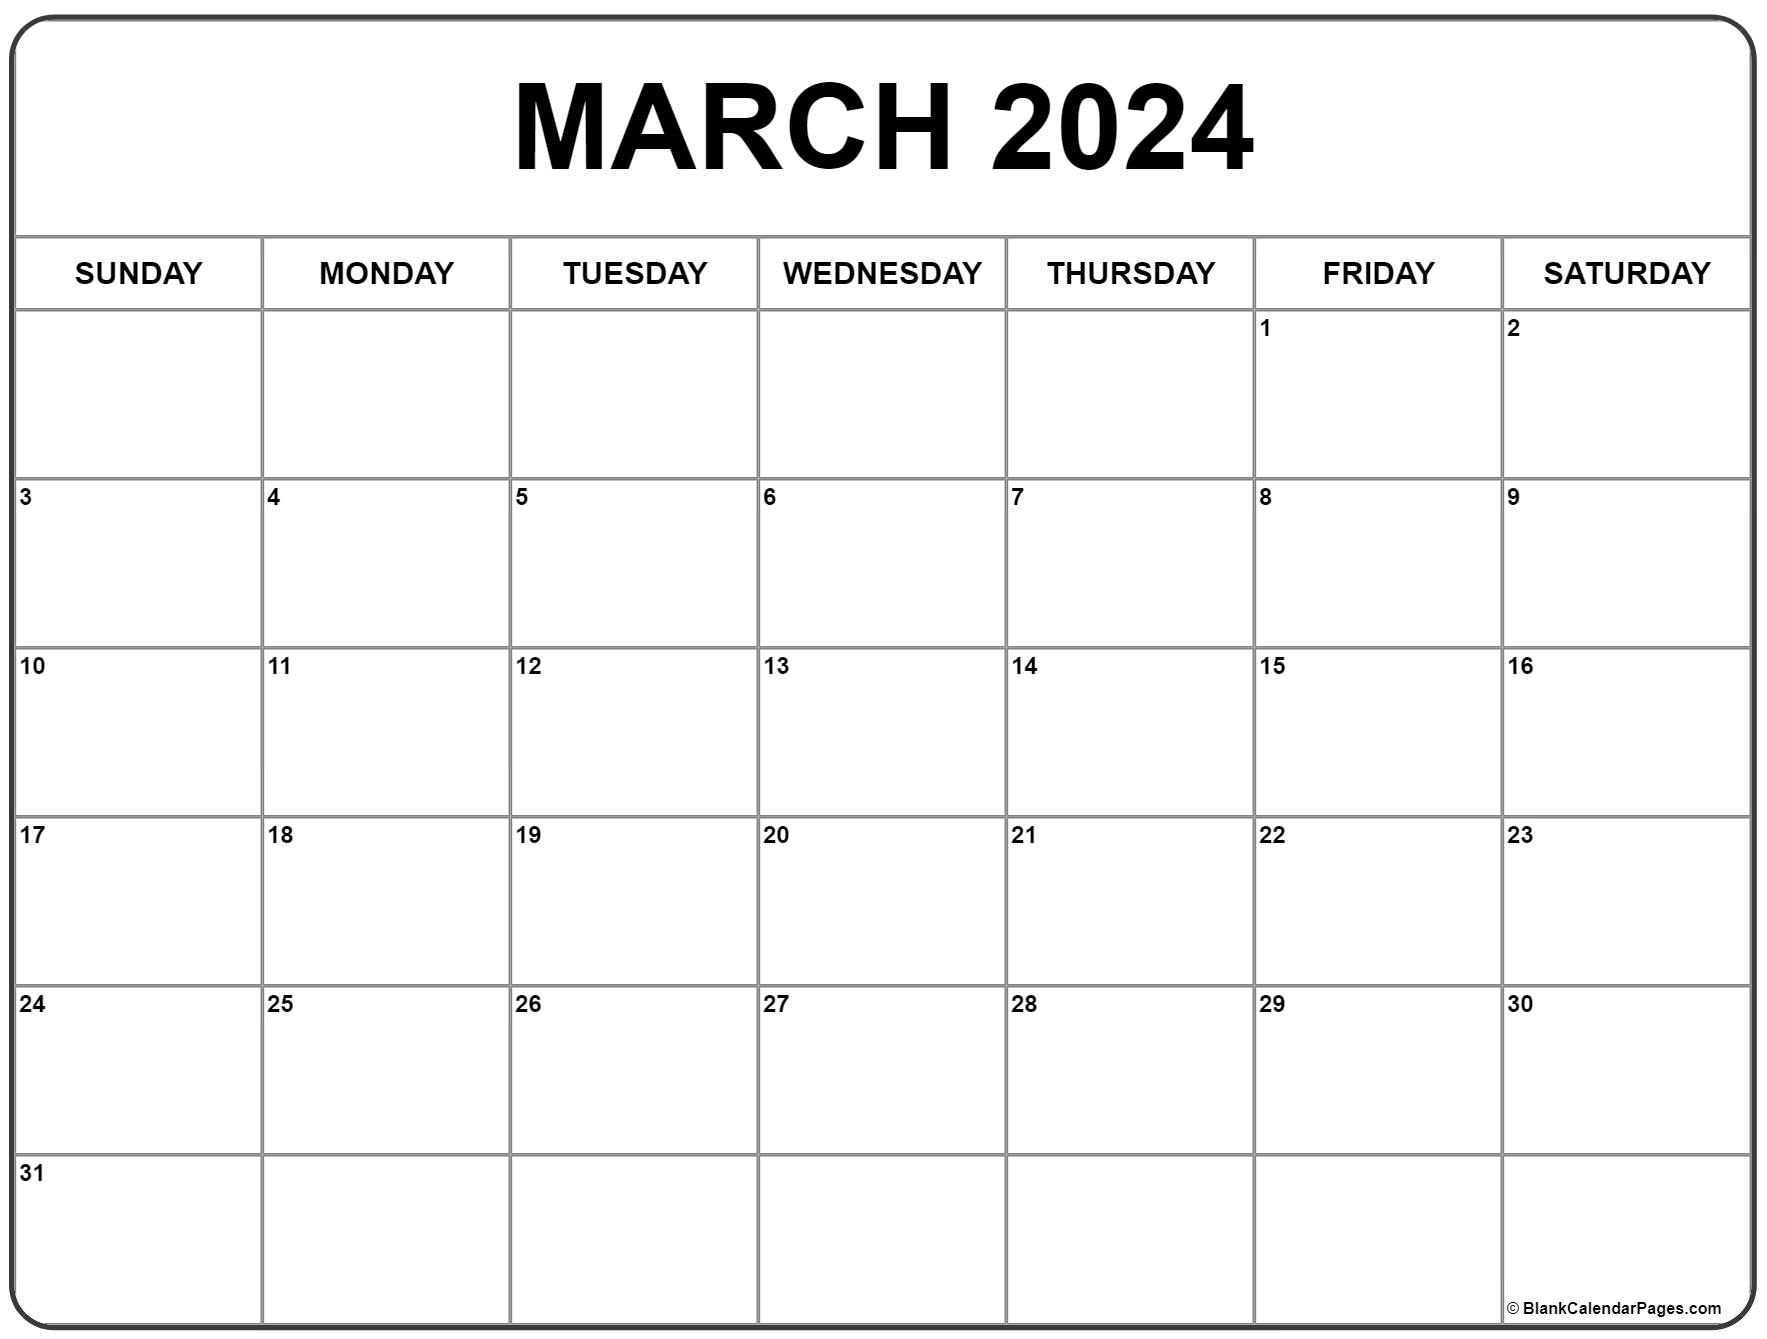 March 2024 Calendar | Free Printable Calendar for March 2024 Calendar Free Printable